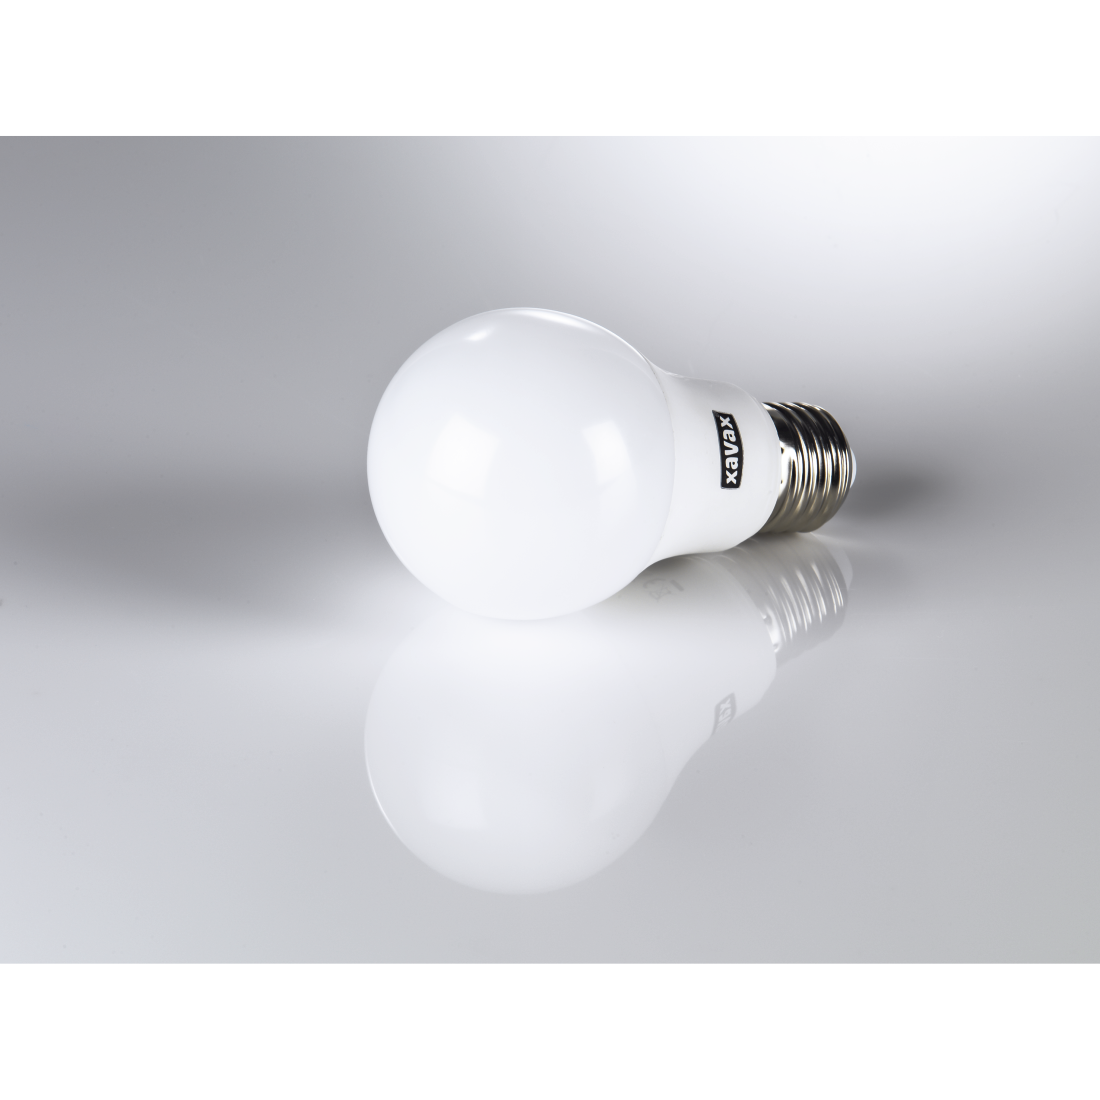 abx3 Druckfähige Abbildung 3 - Xavax, LED-Lampe, E27, 806lm ersetzt 60W, Glühlampe, Warmweiß, 2 Stück